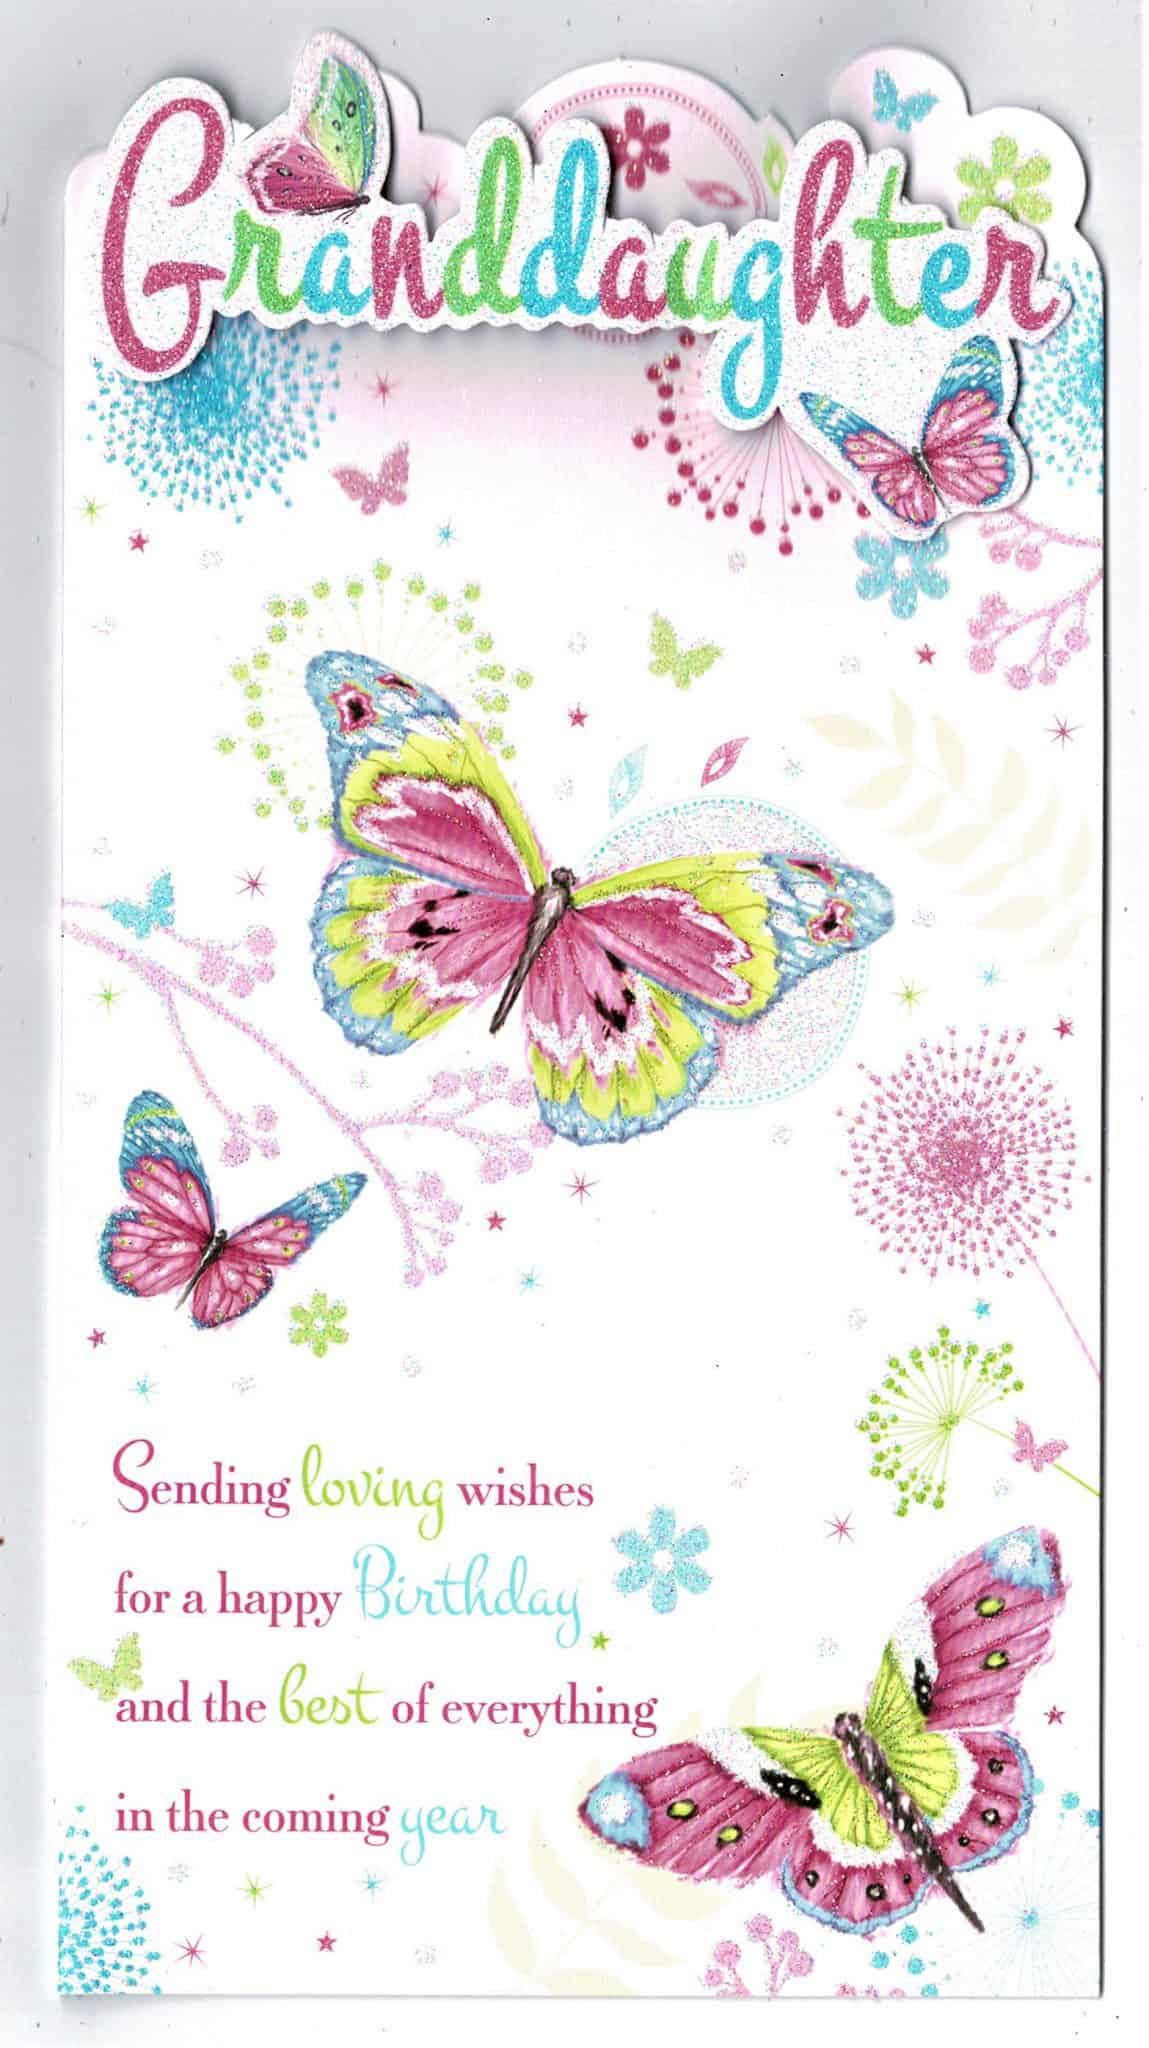 granddaughter-birthday-card-granddaughter-sending-loving-wishes-for-a